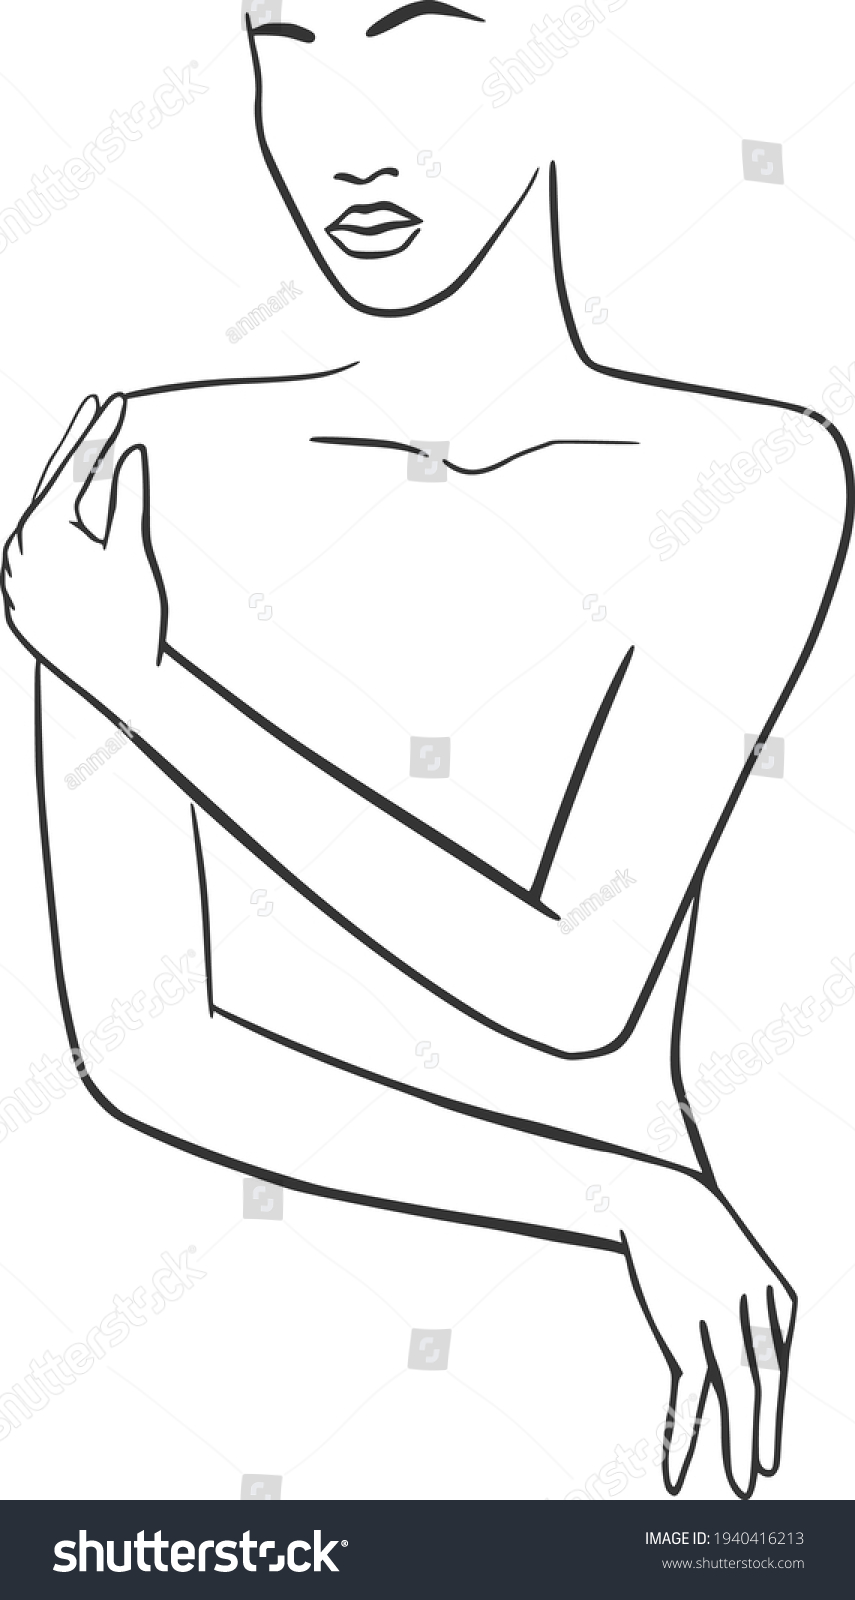 naked women line art clipart nude庫存向量圖免版稅1940416213 shutterstock